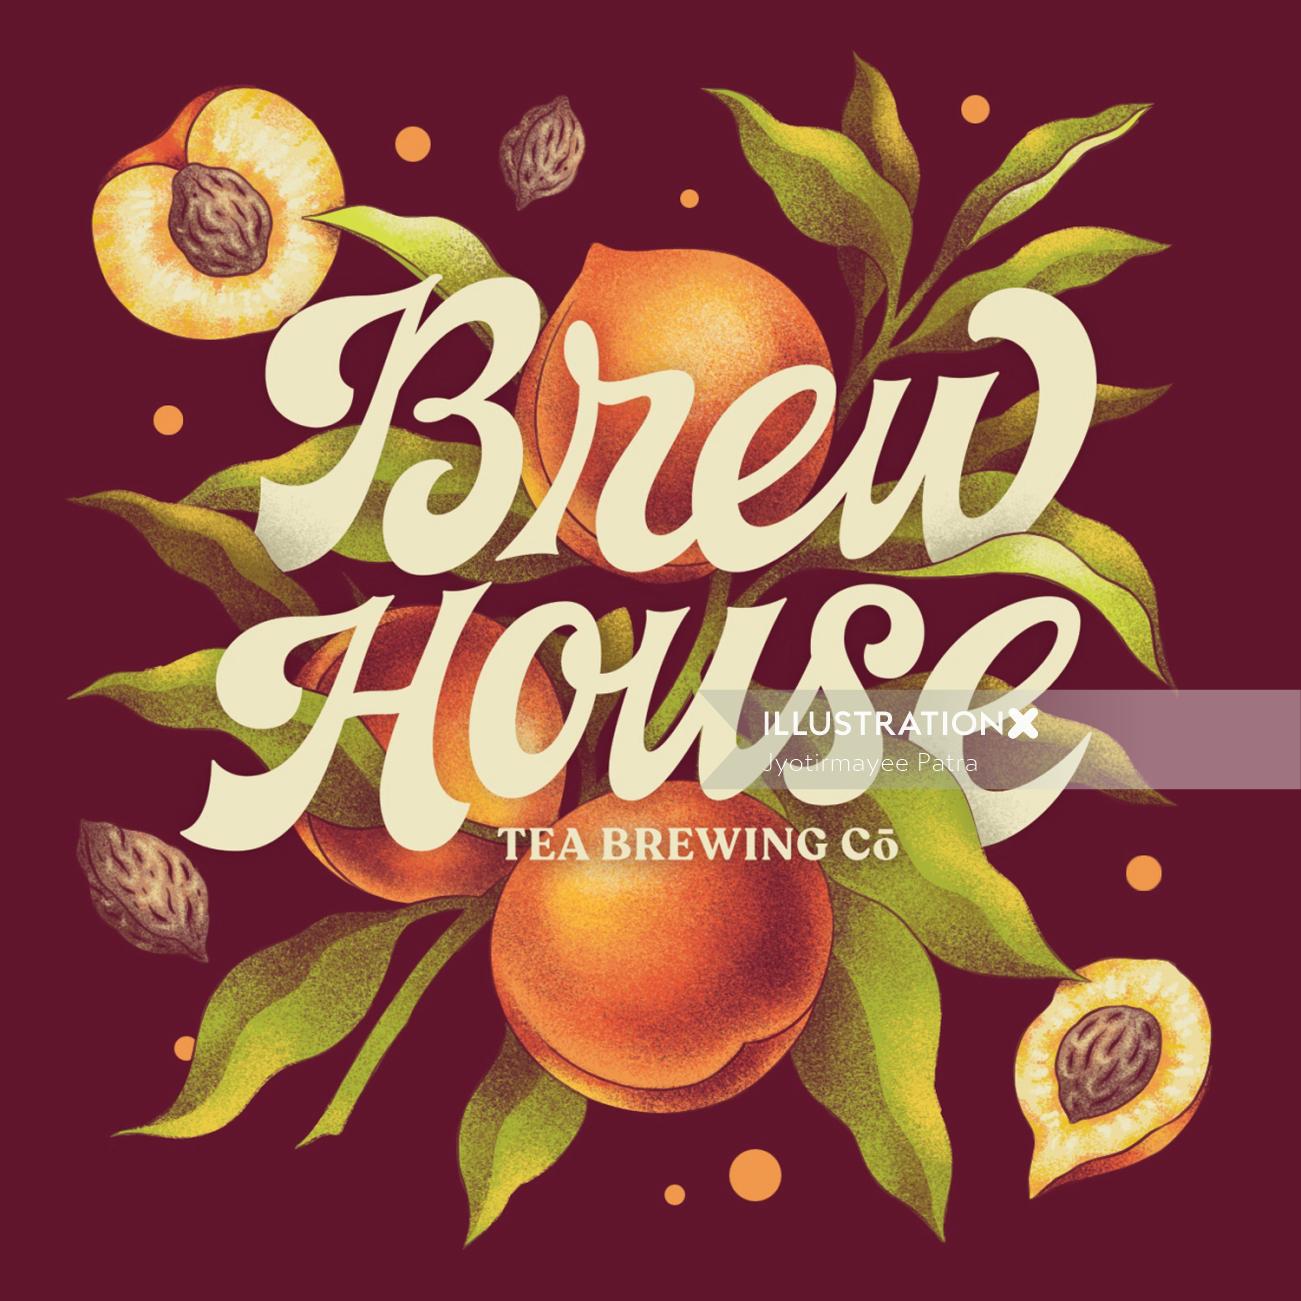 BrewHouse graphic design by Jyotirmayee Patra